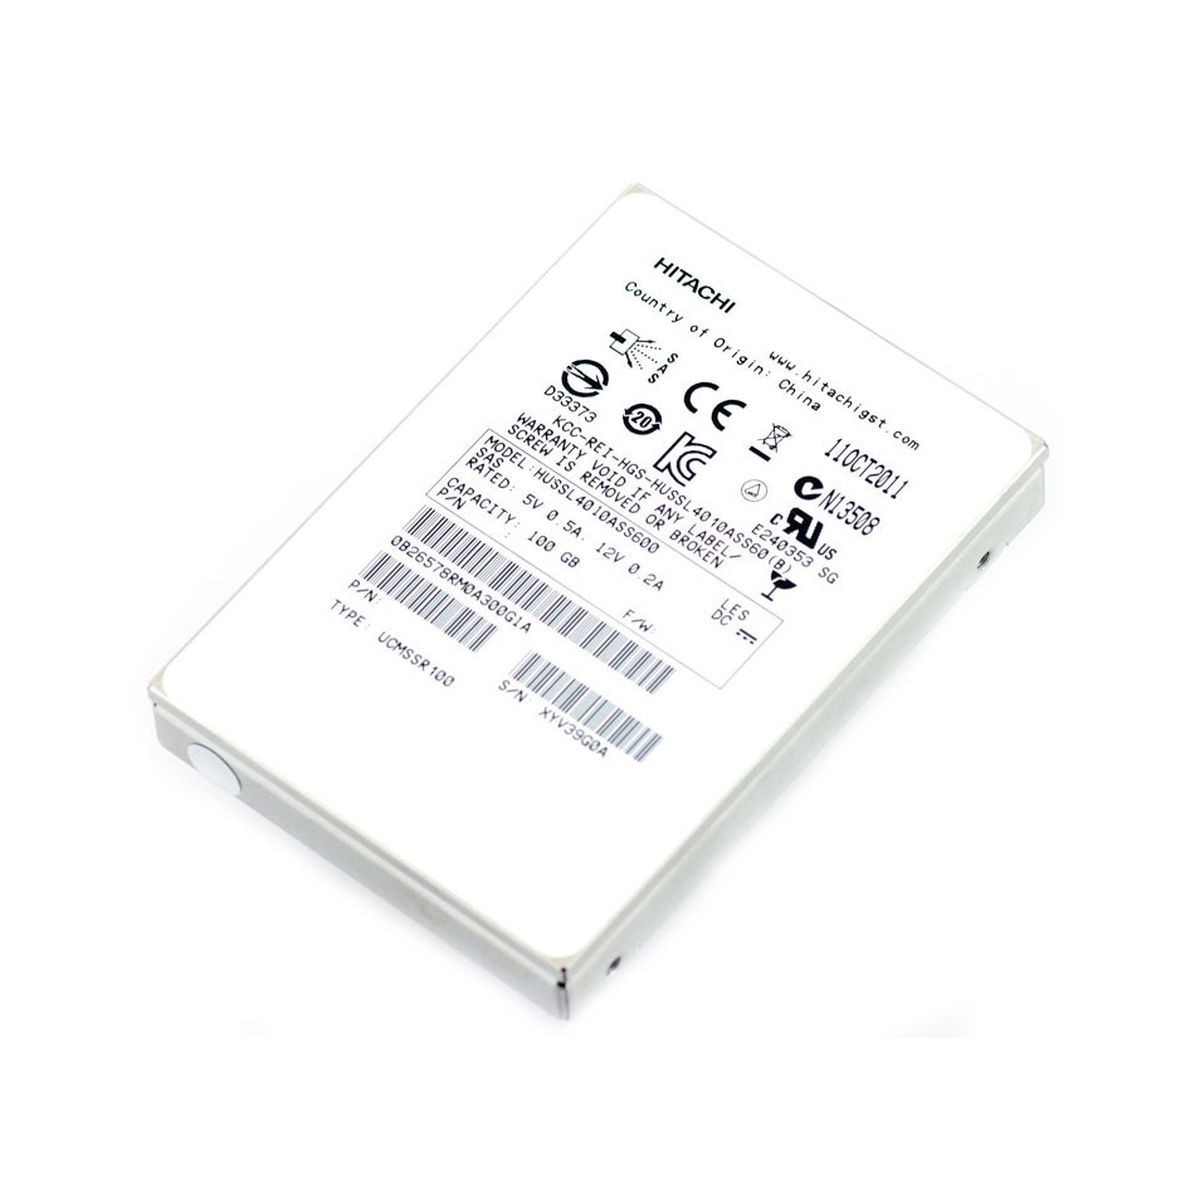 EMC DELL 100GB SSD SAS 6G 2,5 118032770-A02